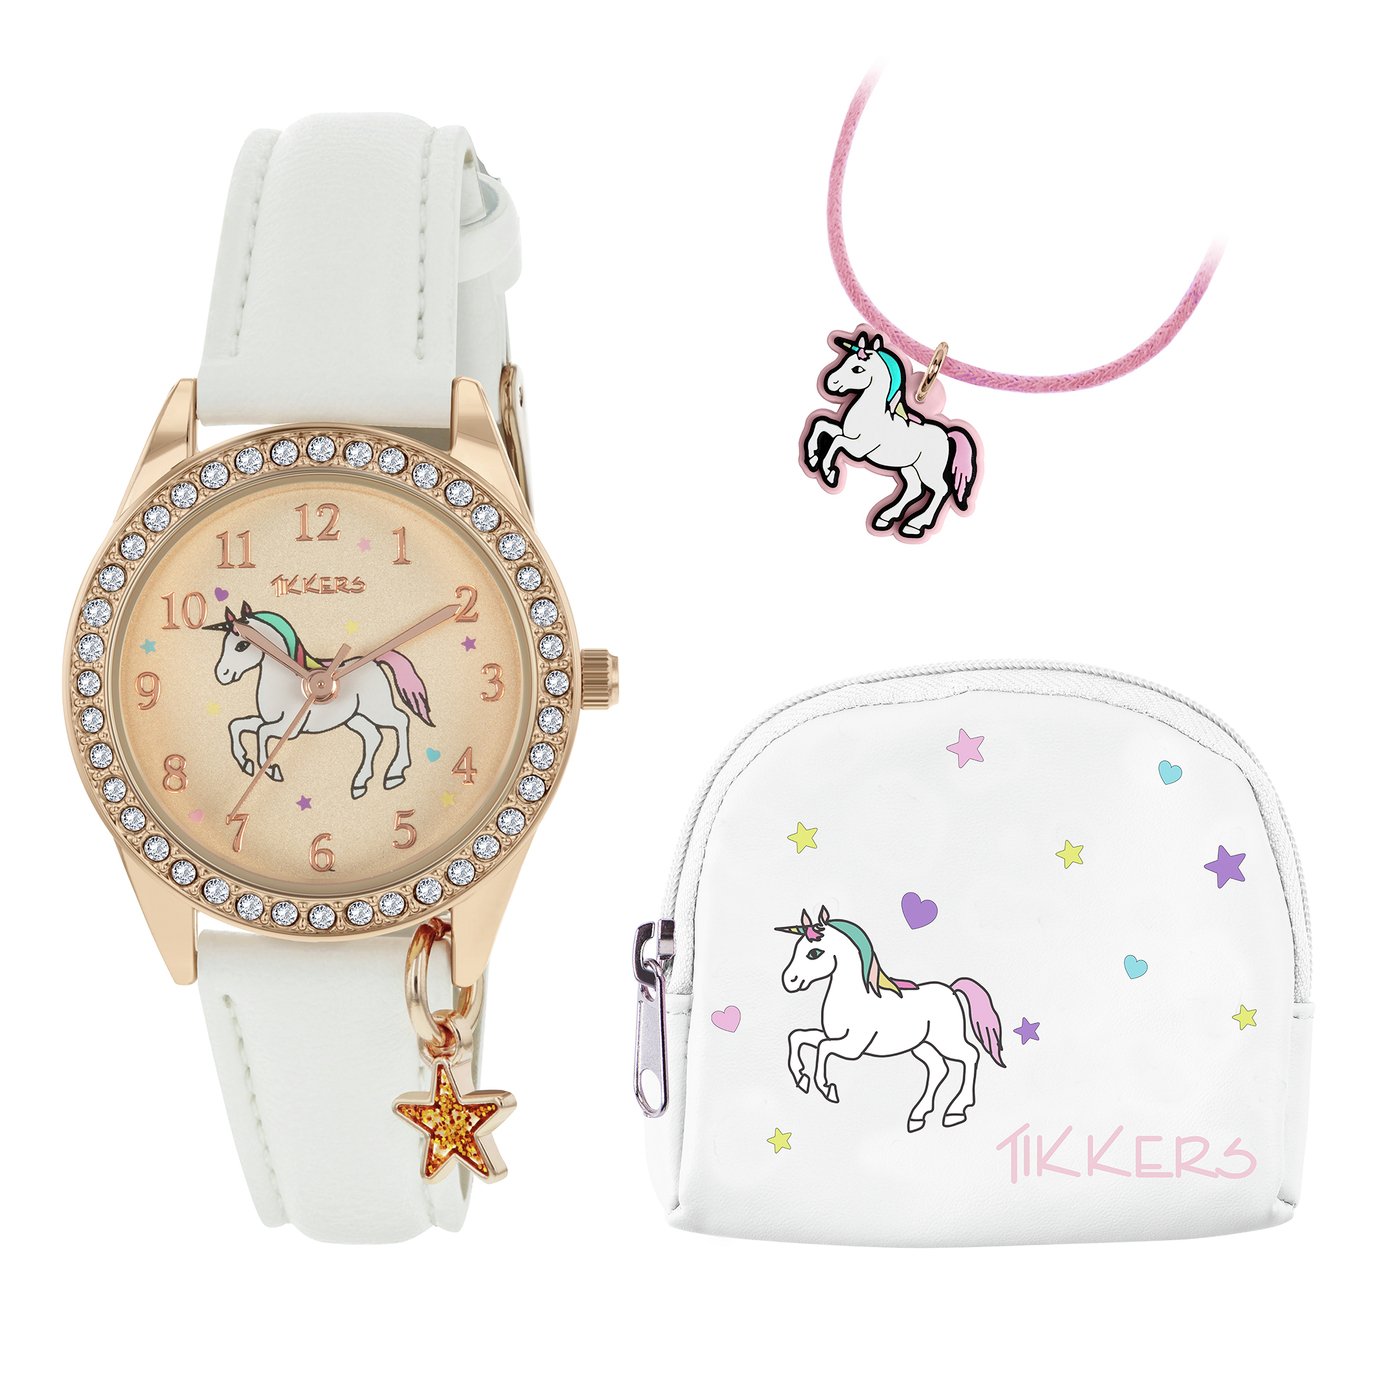 Tikkers Kid's Unicorn Watch, Necklace & Purse Gift Set